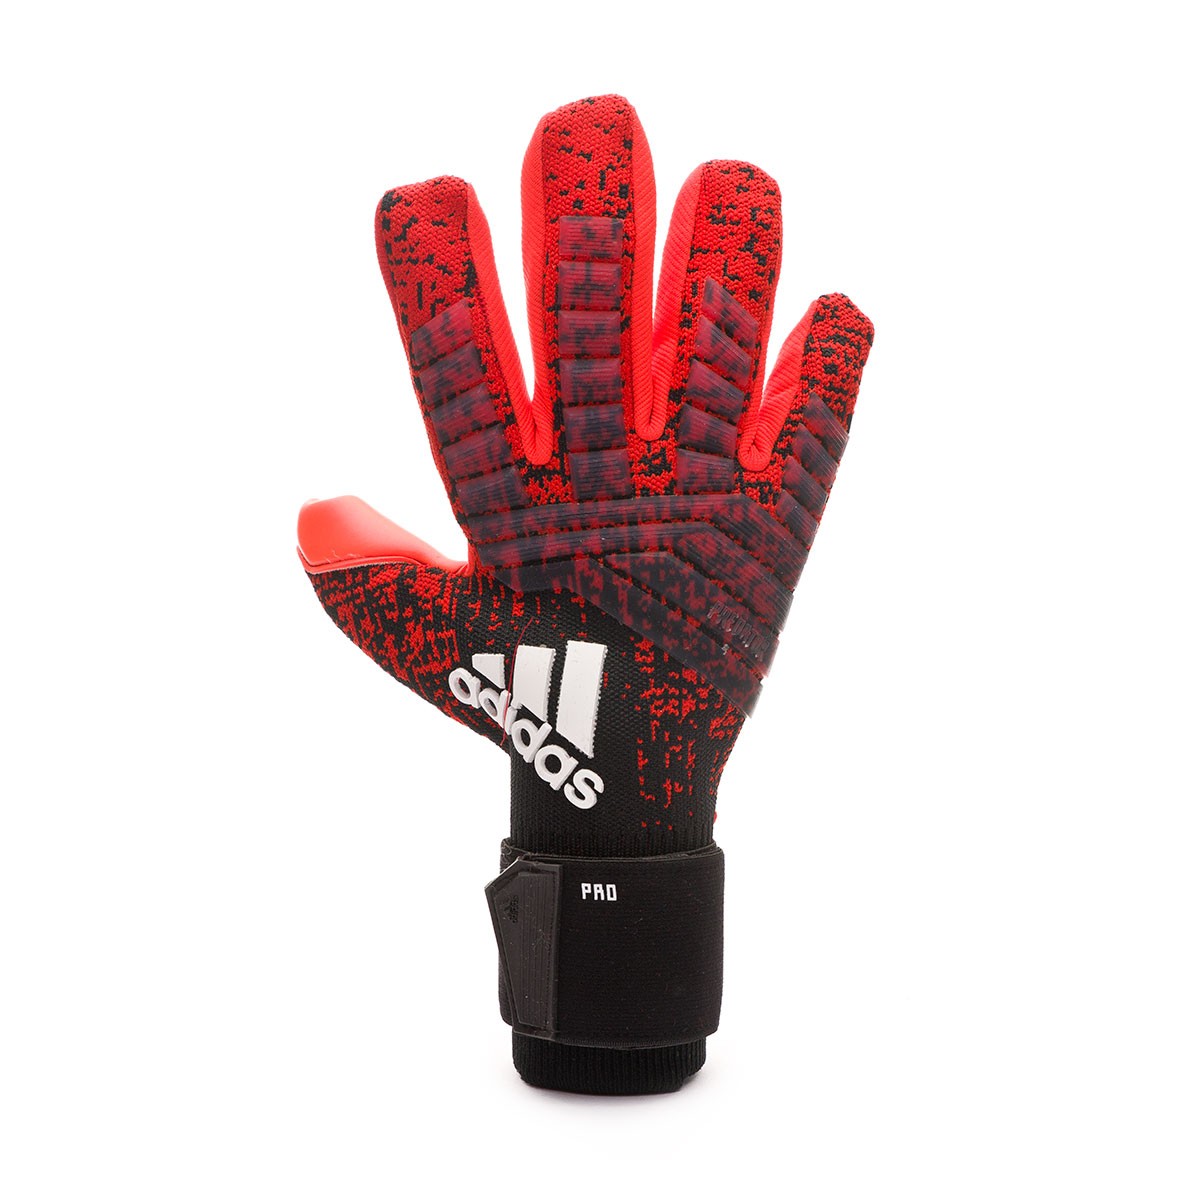 adidas predator junior goalkeeper gloves